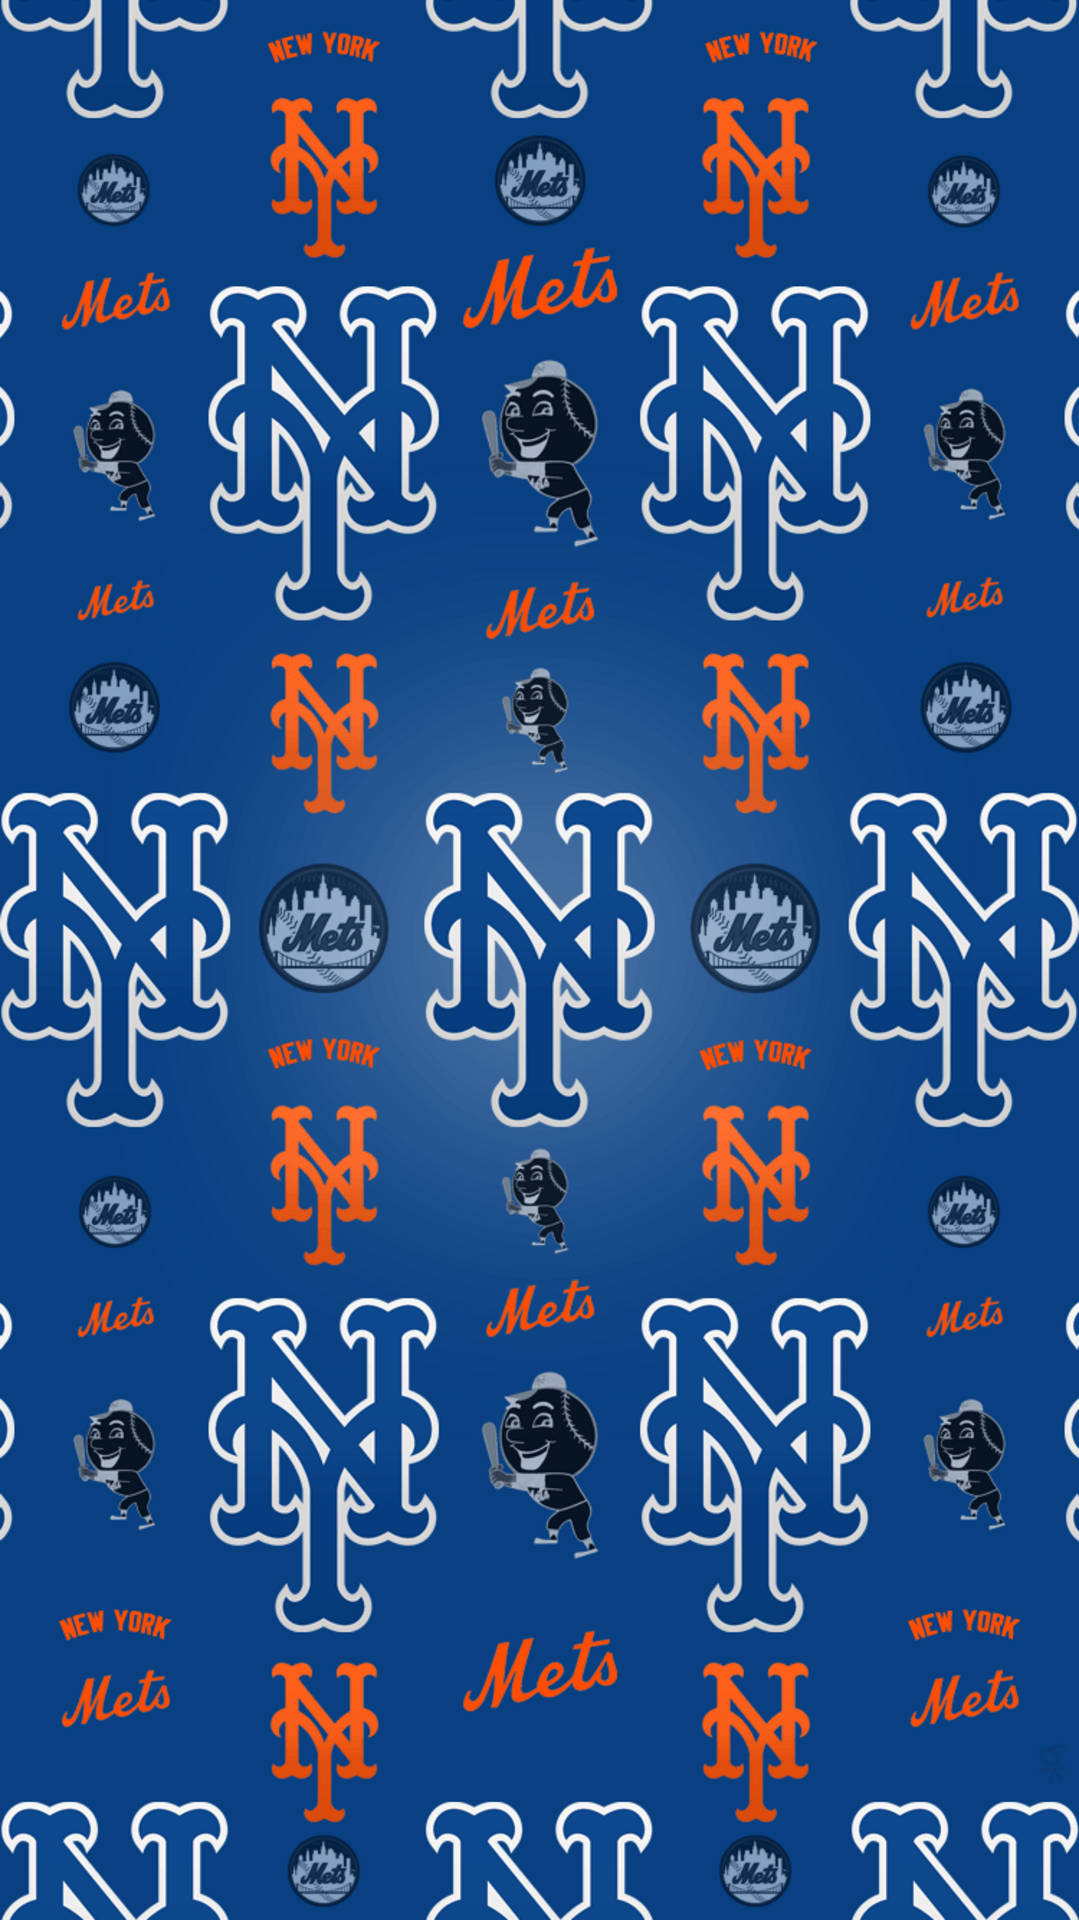 New York Mets  AllStar wallpapers for AllStar players  Facebook